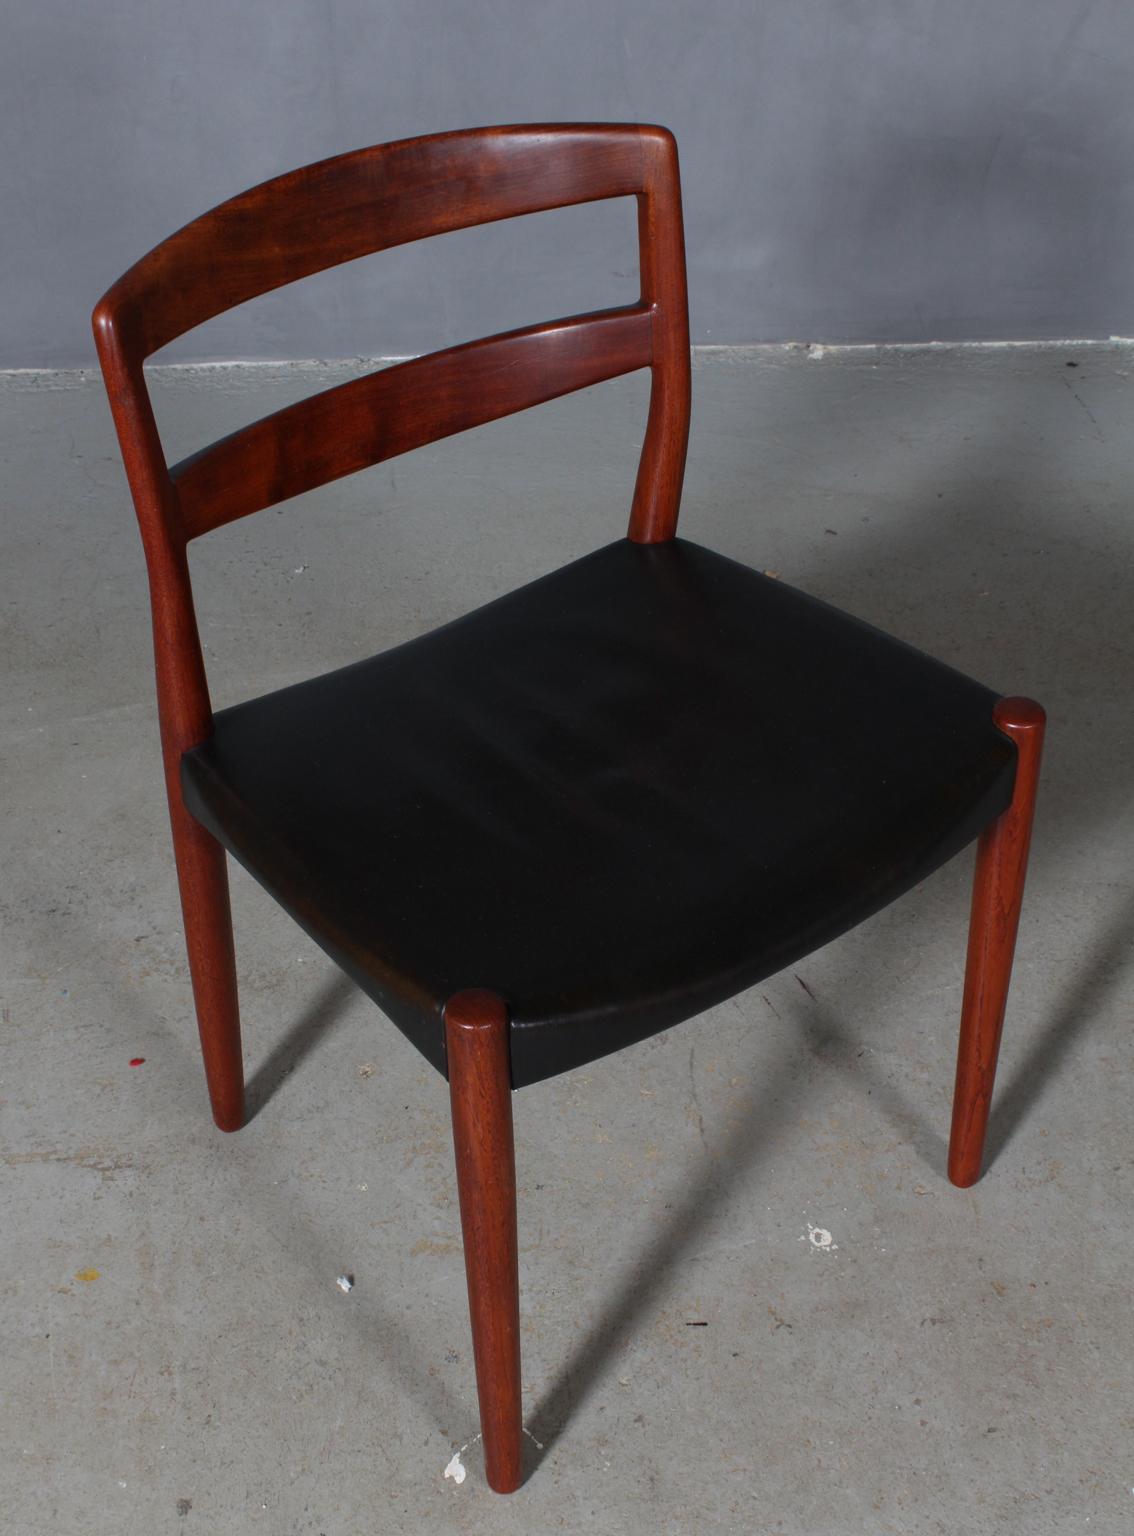 Einer Larsen & Aksel Bender Madsen side chair original upholstered with patinated black leather.

Frame of teak.

Made by Cabinetmaker Willy Beck.